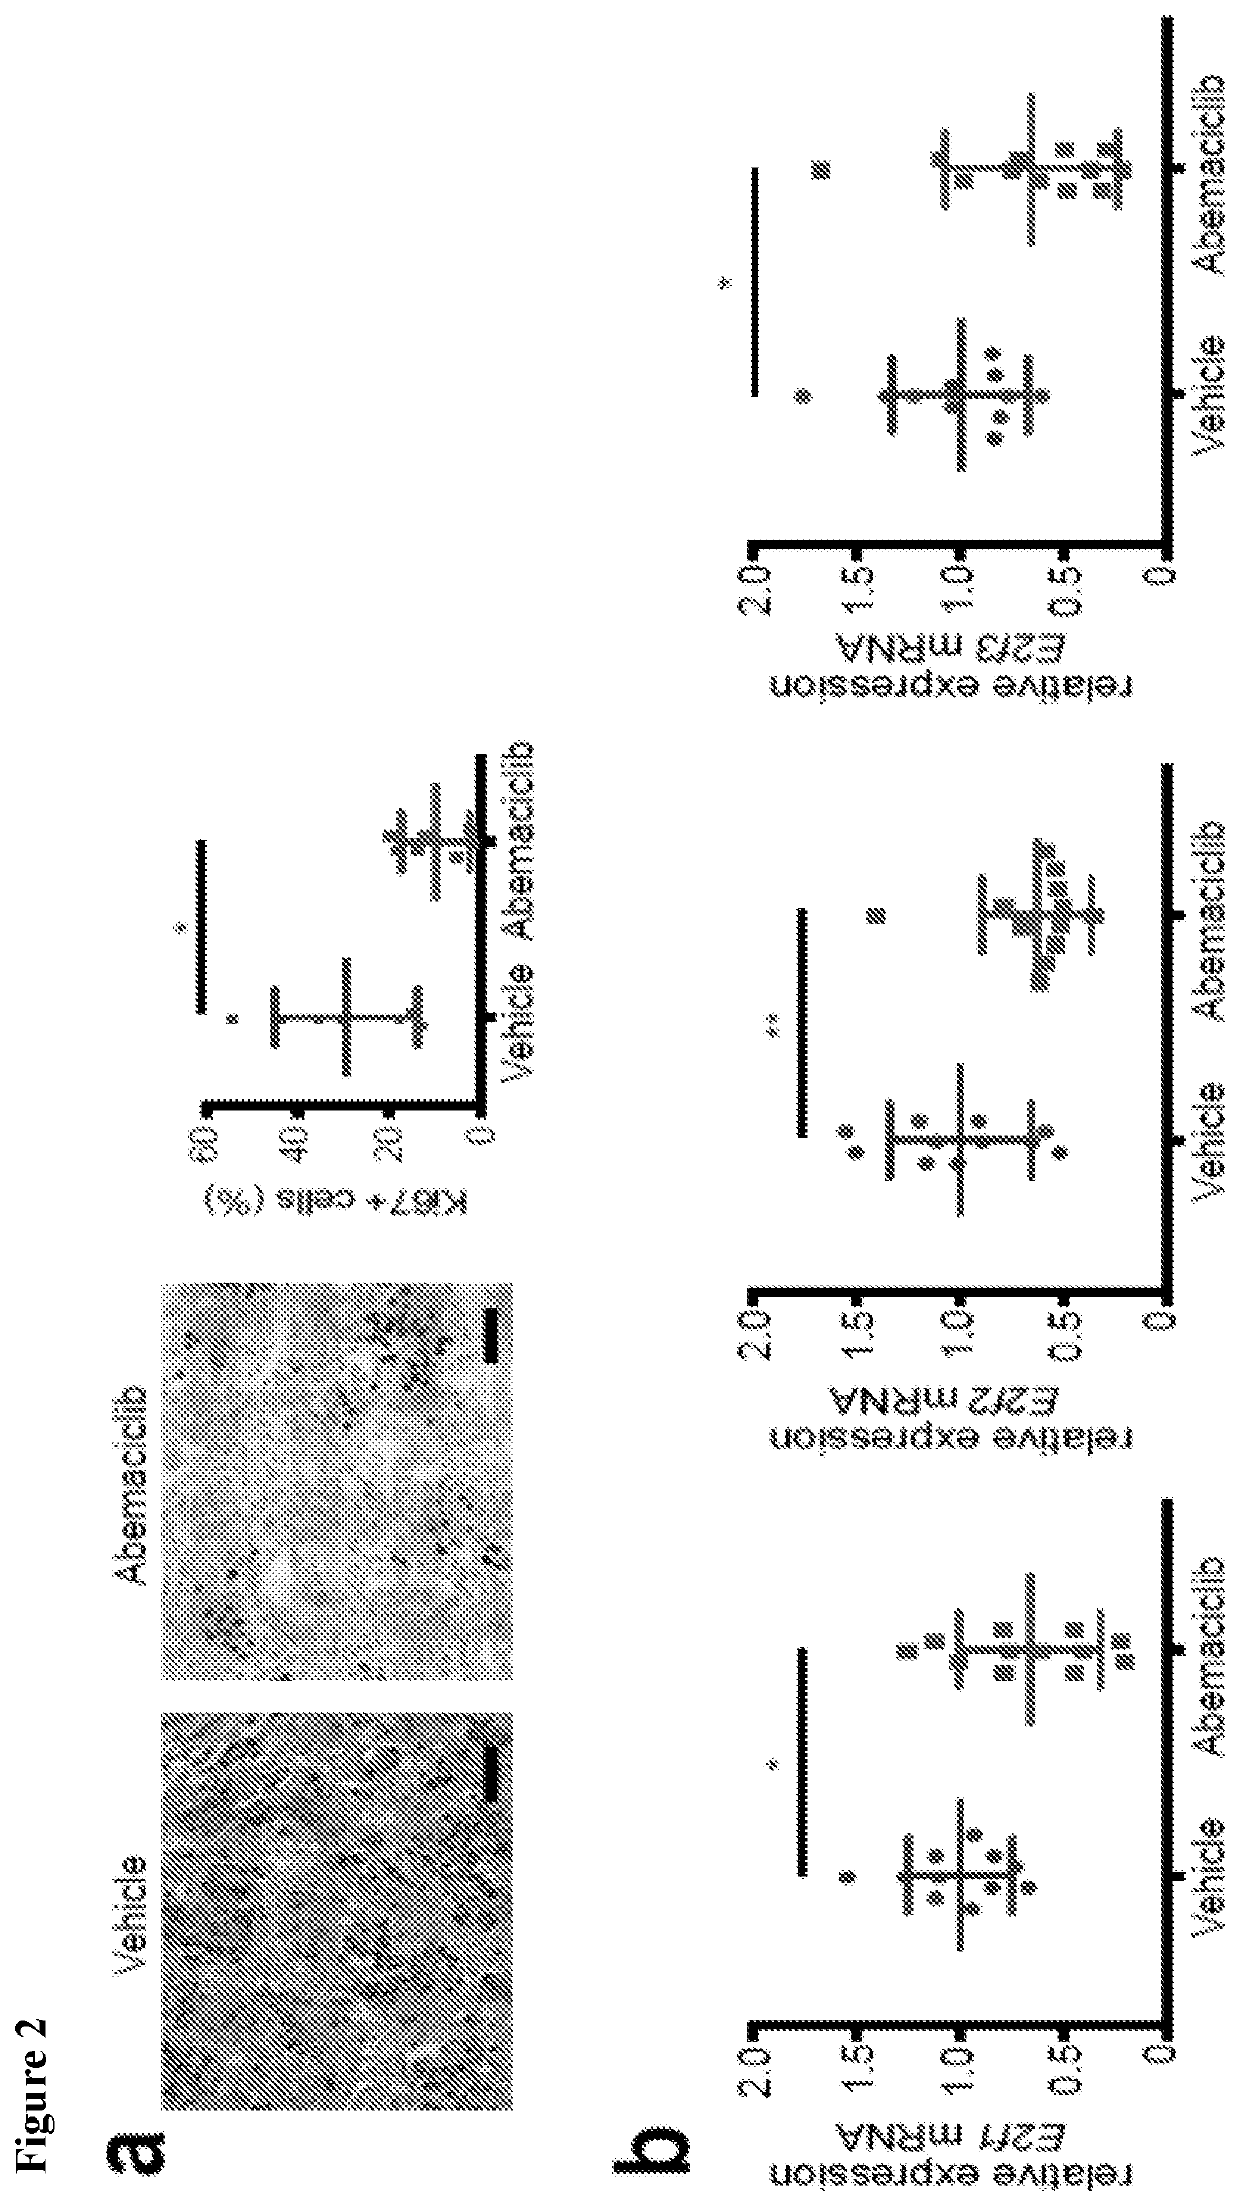 Methods for modulating regulatory t cells and immune responses using cdk4/6 inhibitors